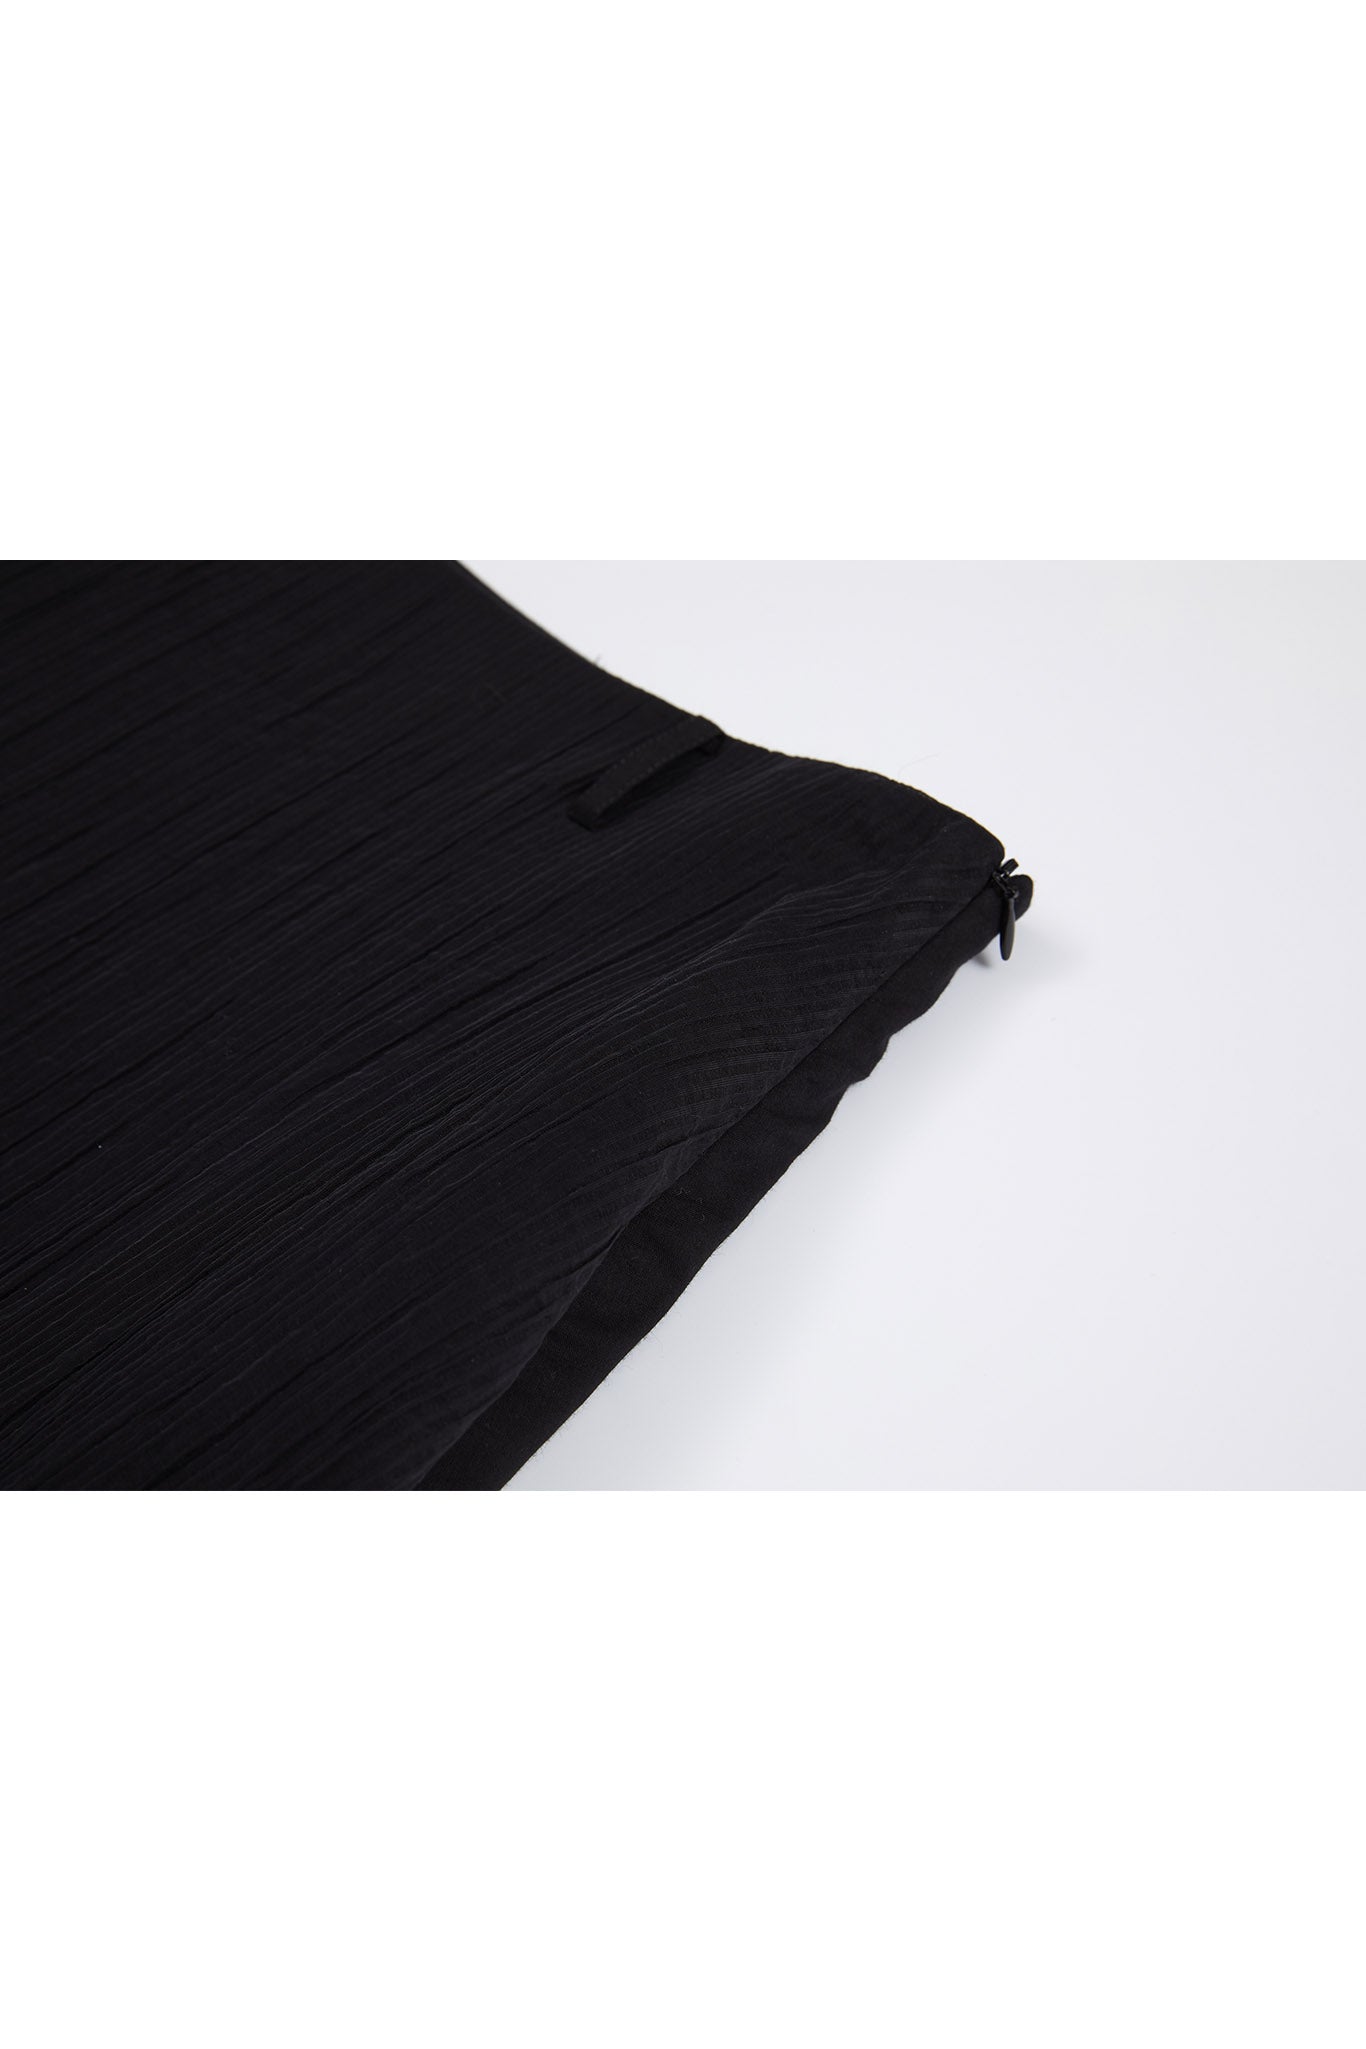 Yangliu Style Layered Sheer Tight Flare Skirt